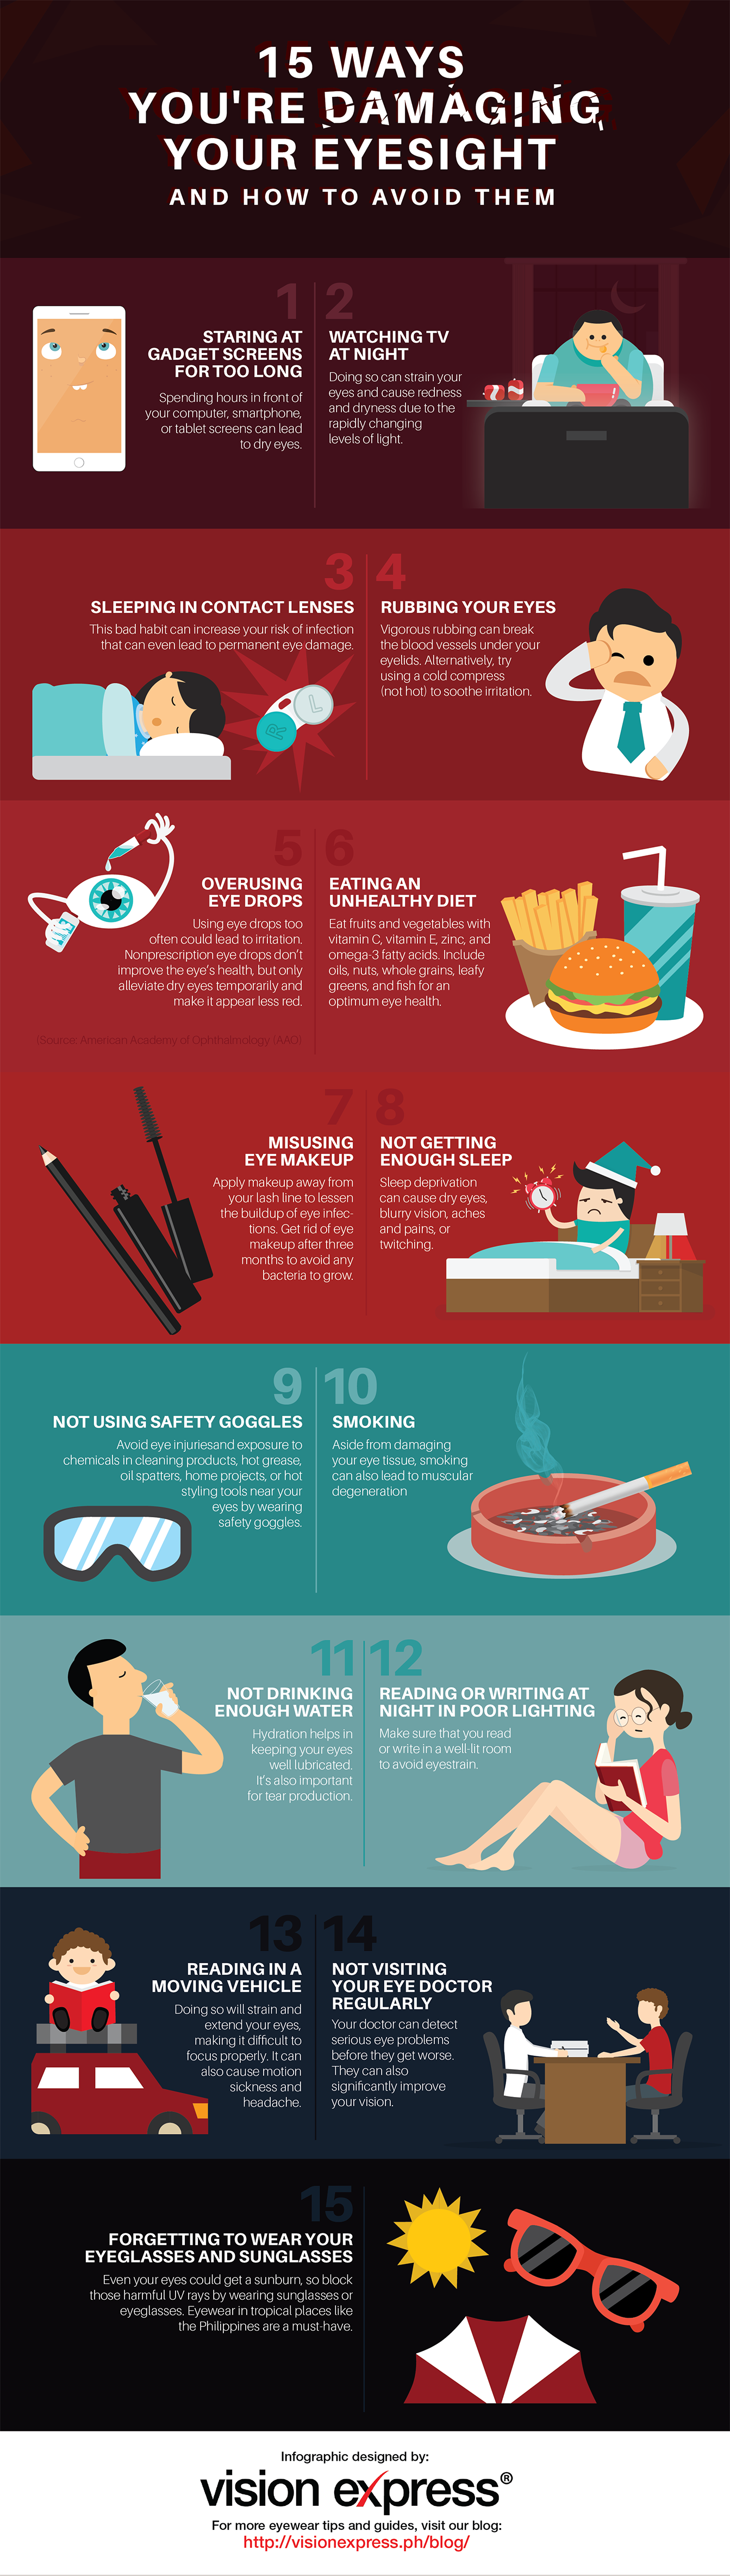 15 Ways You’re Damaging Your Eyesight Without Realizing It Infographic